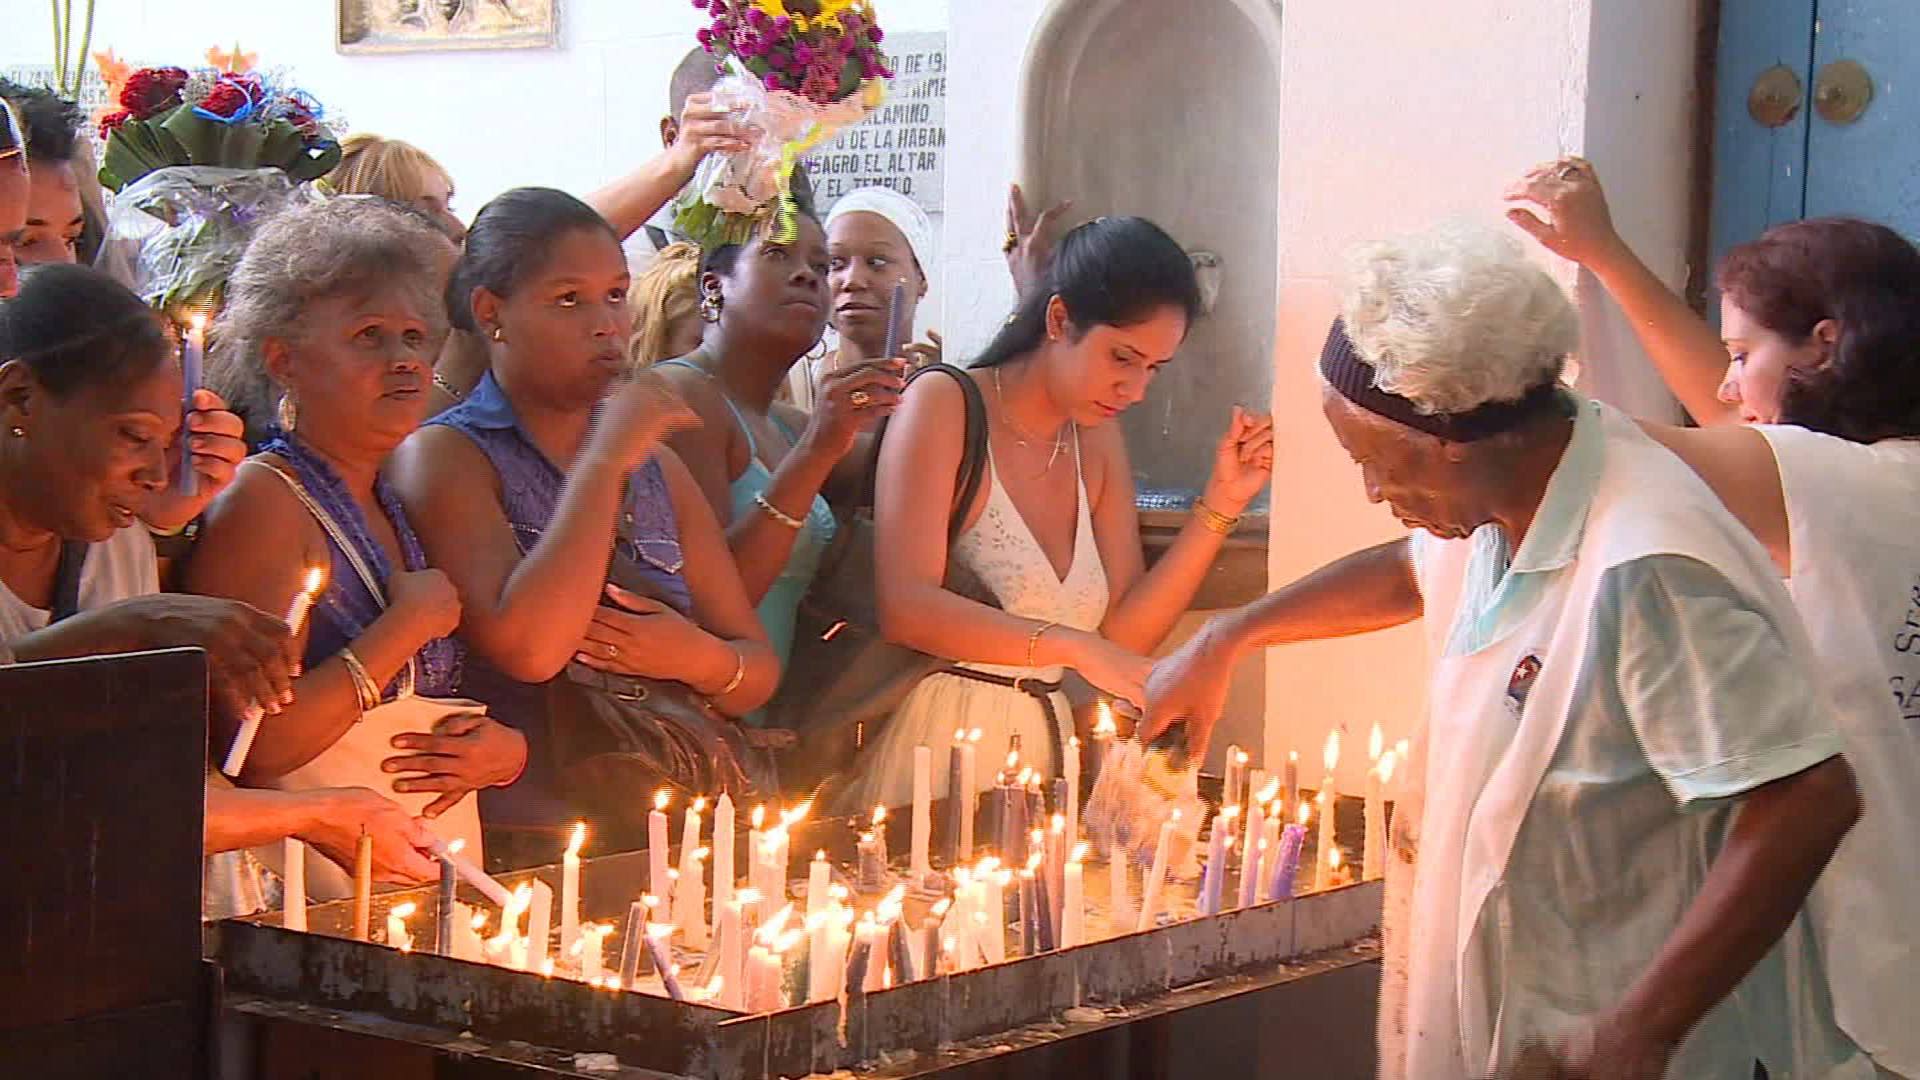 The rise of Santeria in Cuba